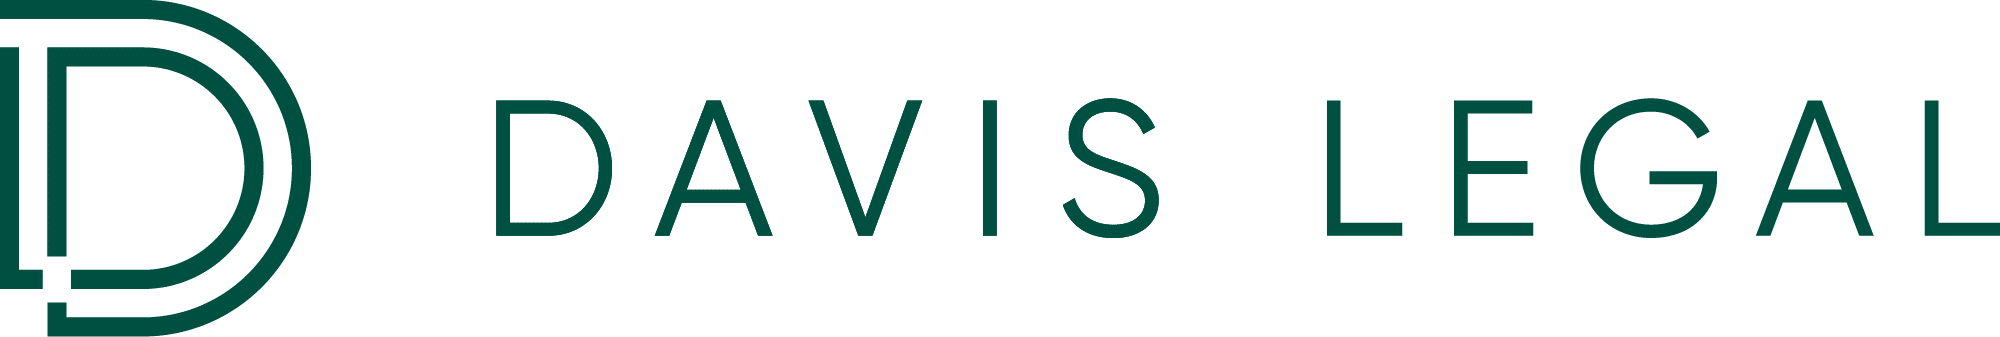 davis law - logo horizontal - green - rgb